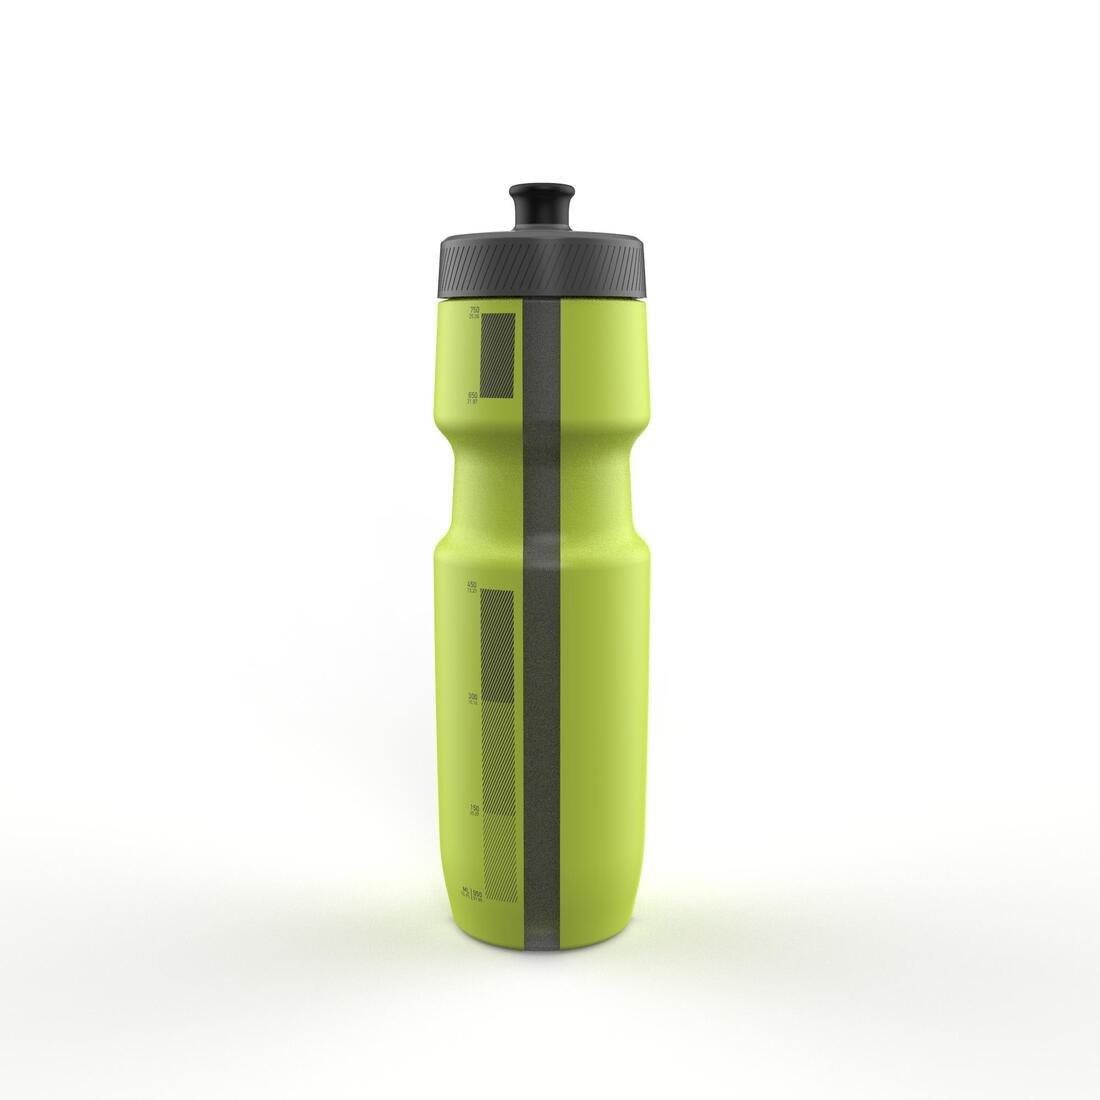 TRIBAN - 800 Ml Cycling Water Bottle Softflow, Blue